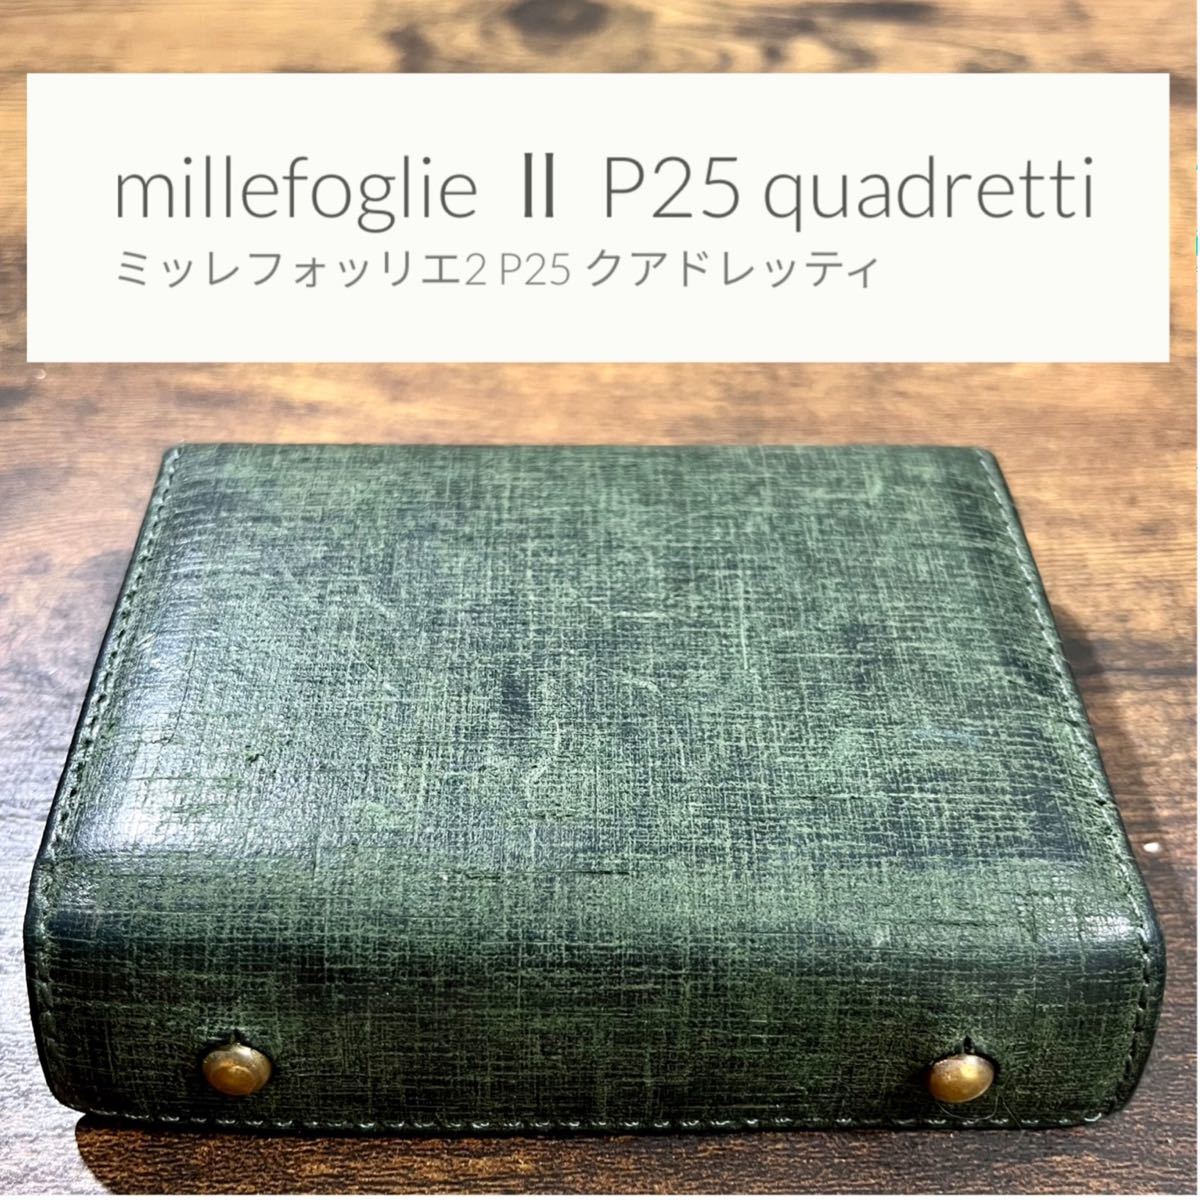 m+ millefoglieⅡP25 quadretti green エムピウ ミッレフォッリエ2 P25 